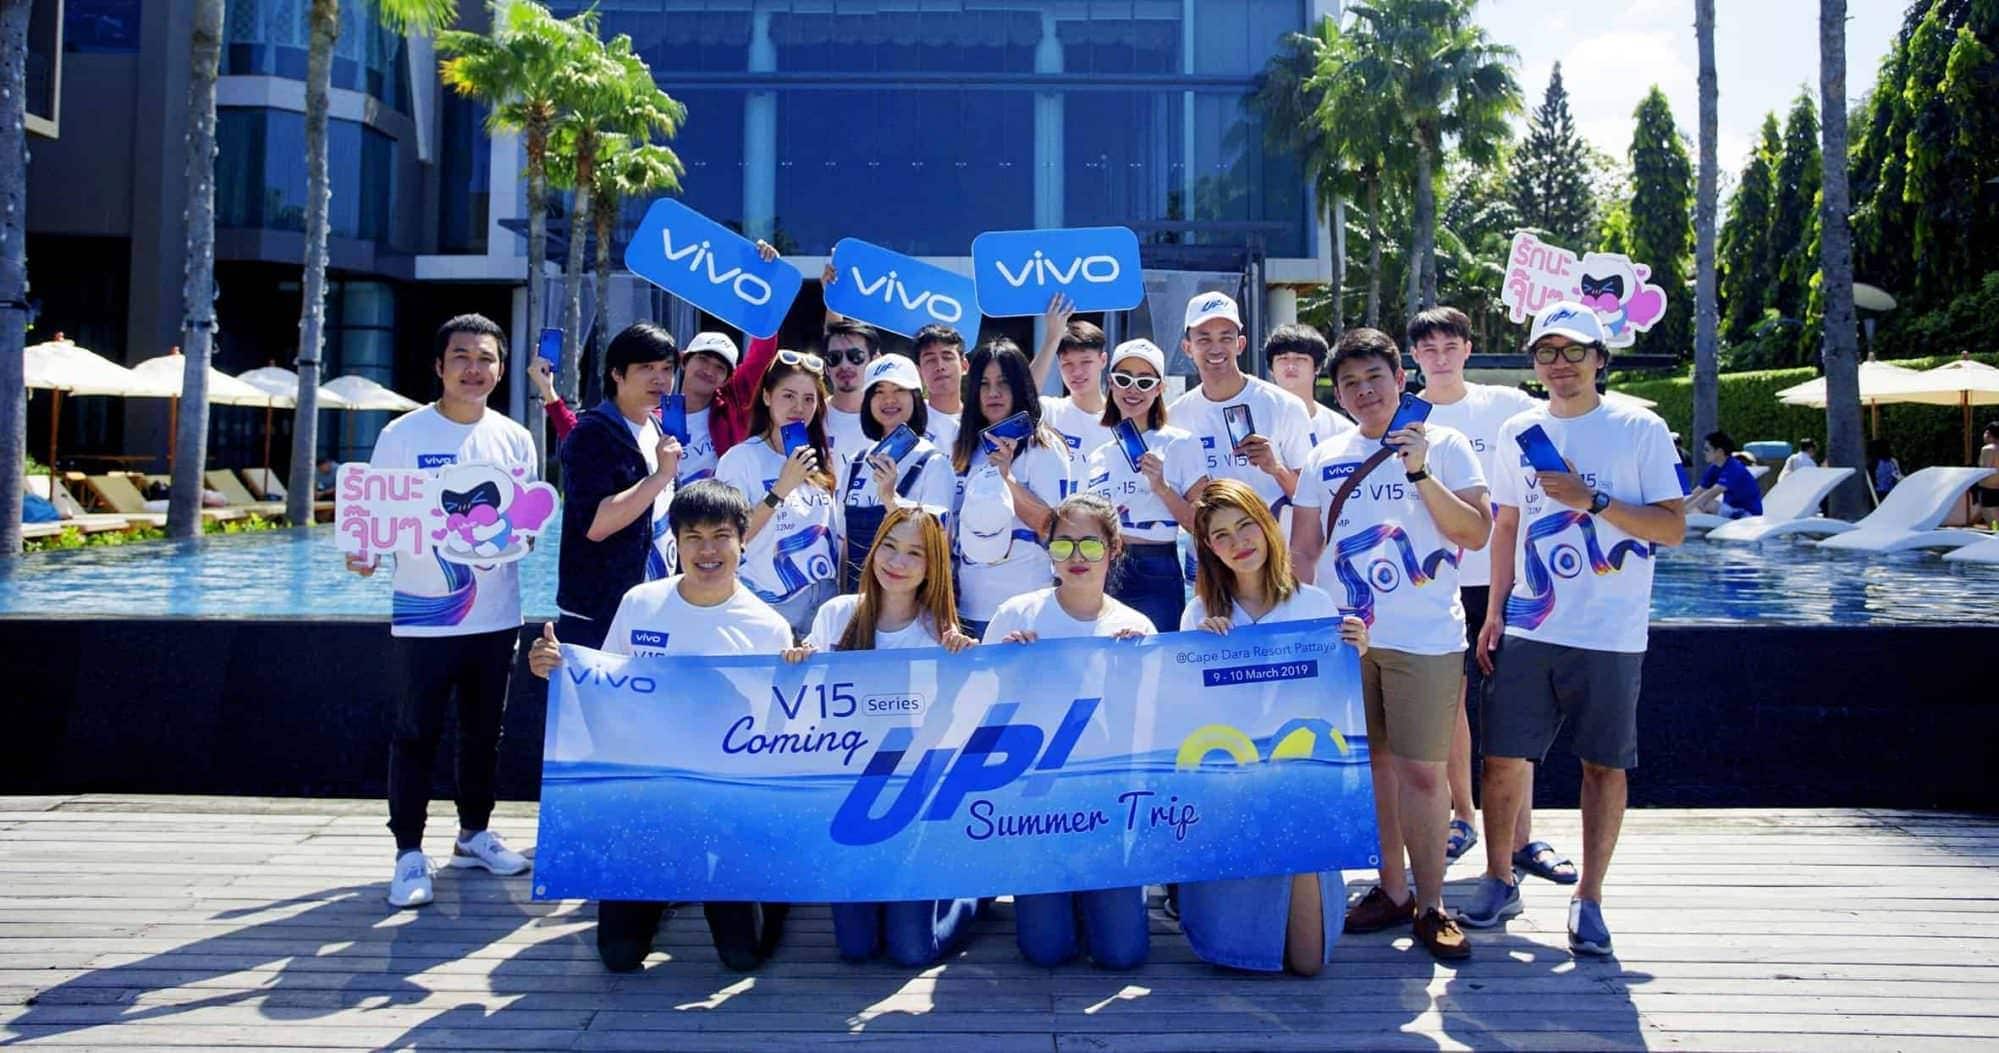 Vivo ประเทศไทย พาผู้โชคดีเดินทางไปร่วมทริปเอ็กซ์คลูซีฟ Vivo V15 Coming “UP” Summer สุดหรูริมหาดพัทยา 1